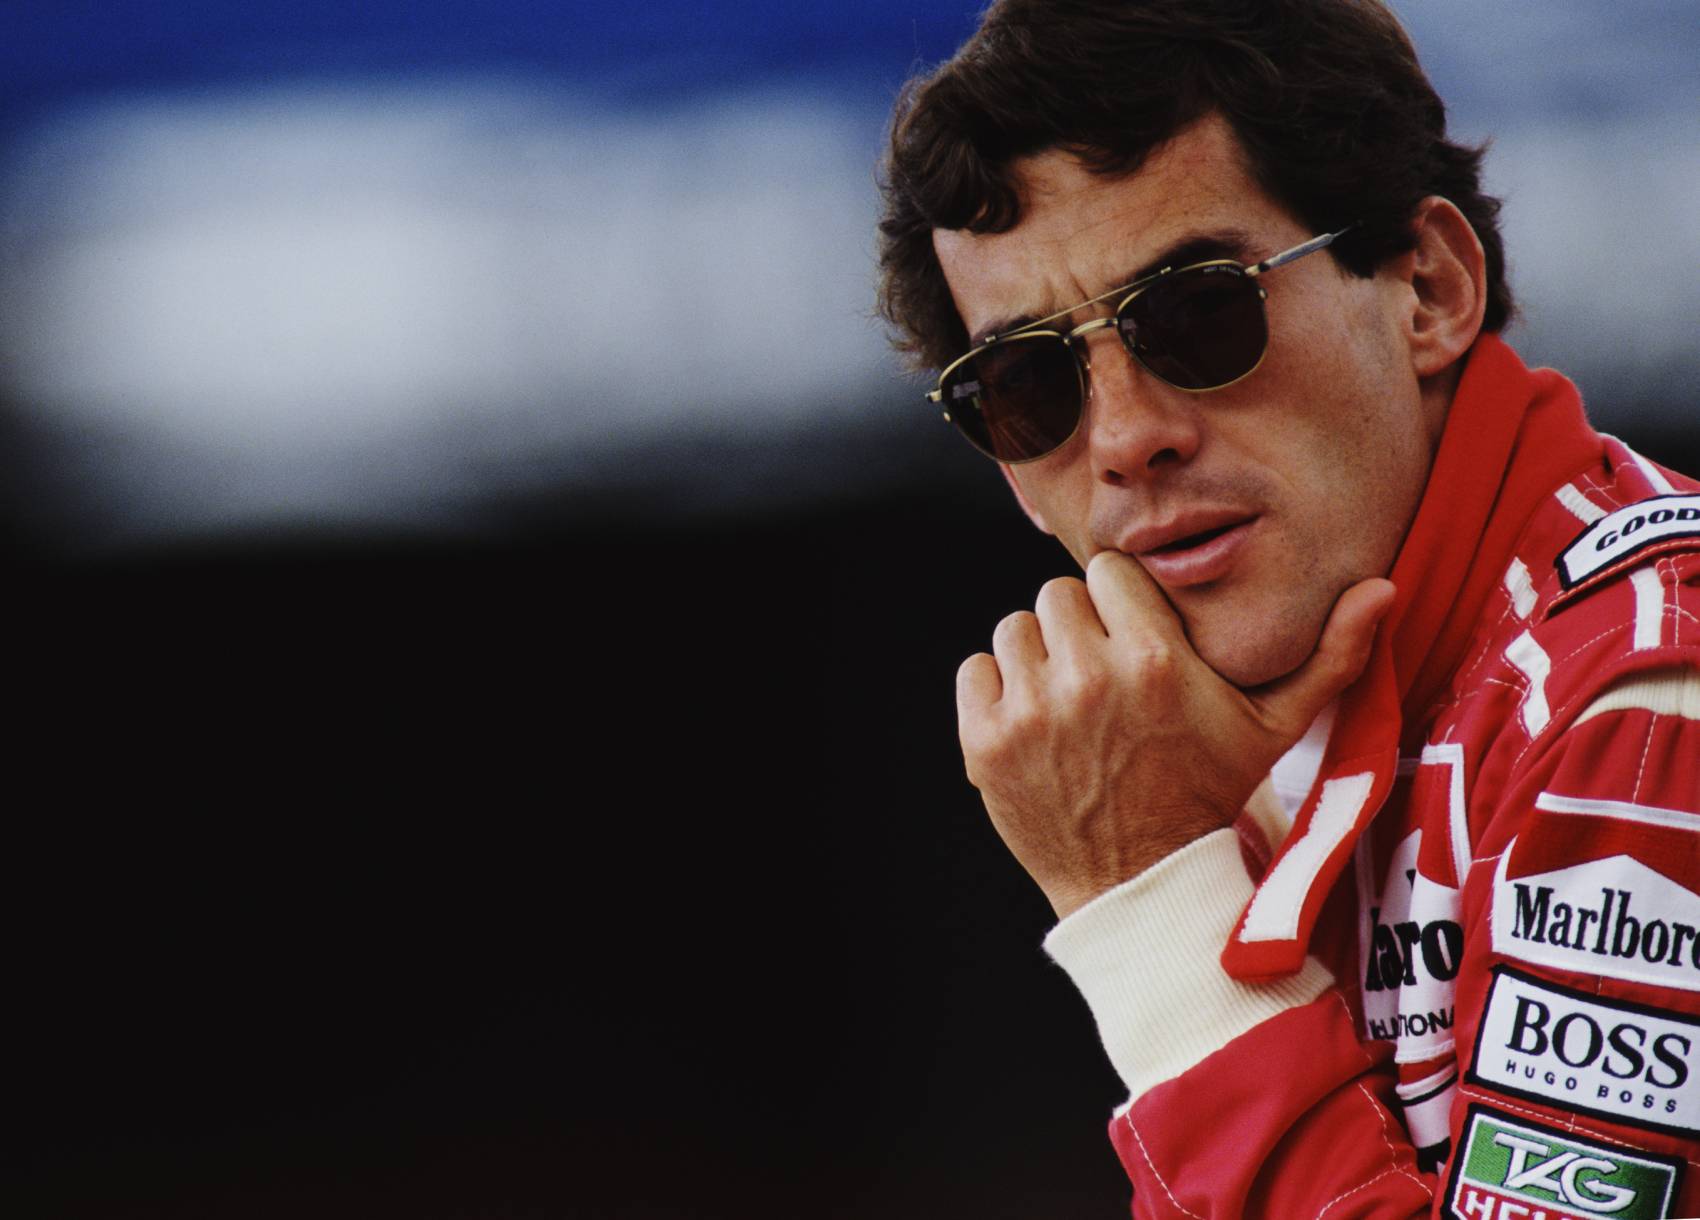 Ayrton Senna’s Tragic Death on the Track Changed Formula One Forever